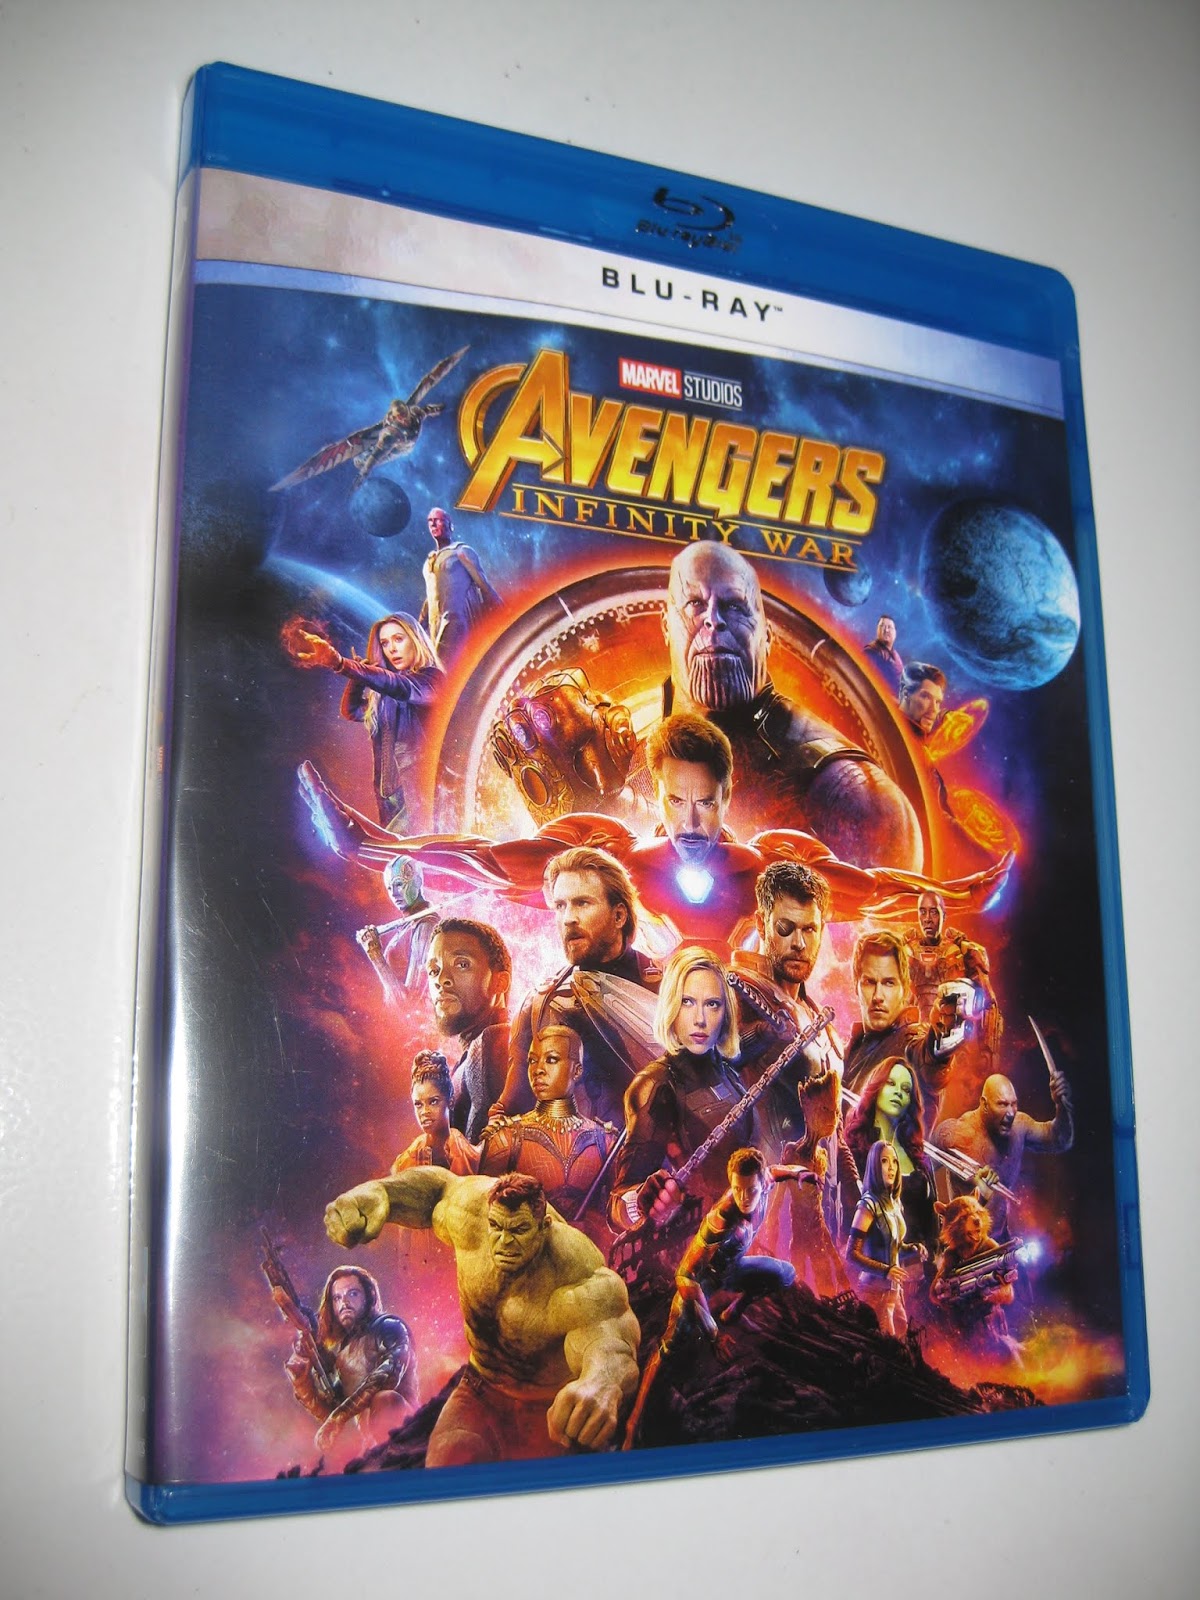 deSMOnd Collection: Blu-ray "Marvel Avengers: Infinity War"